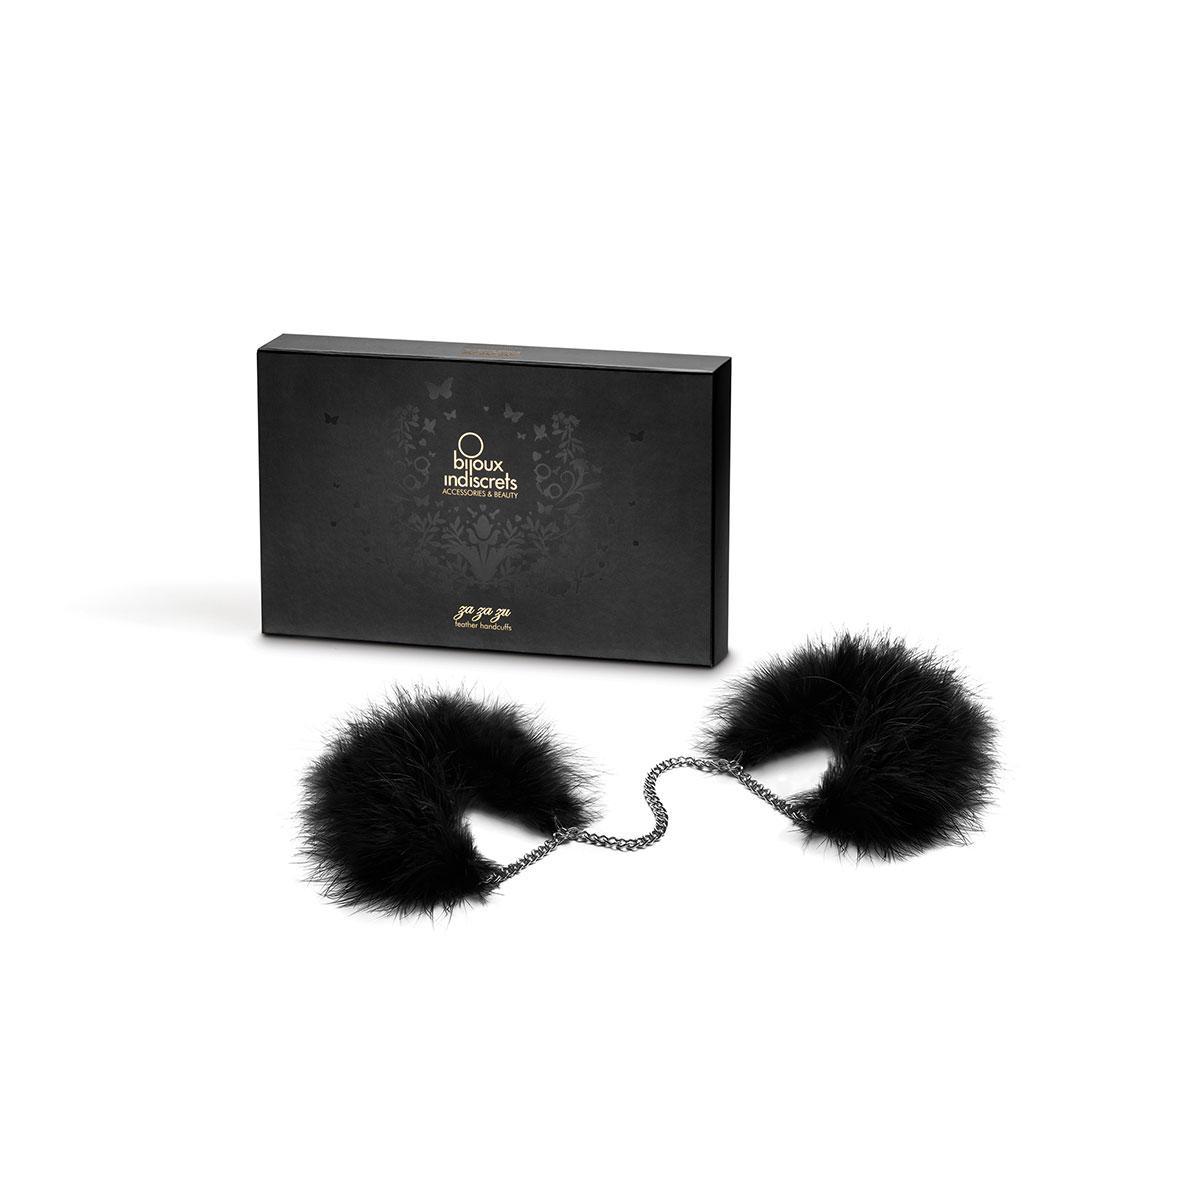 Bijoux Indiscrets Za za zu Feather Cuffs - Buy At Luxury Toy X - Free 3-Day Shipping